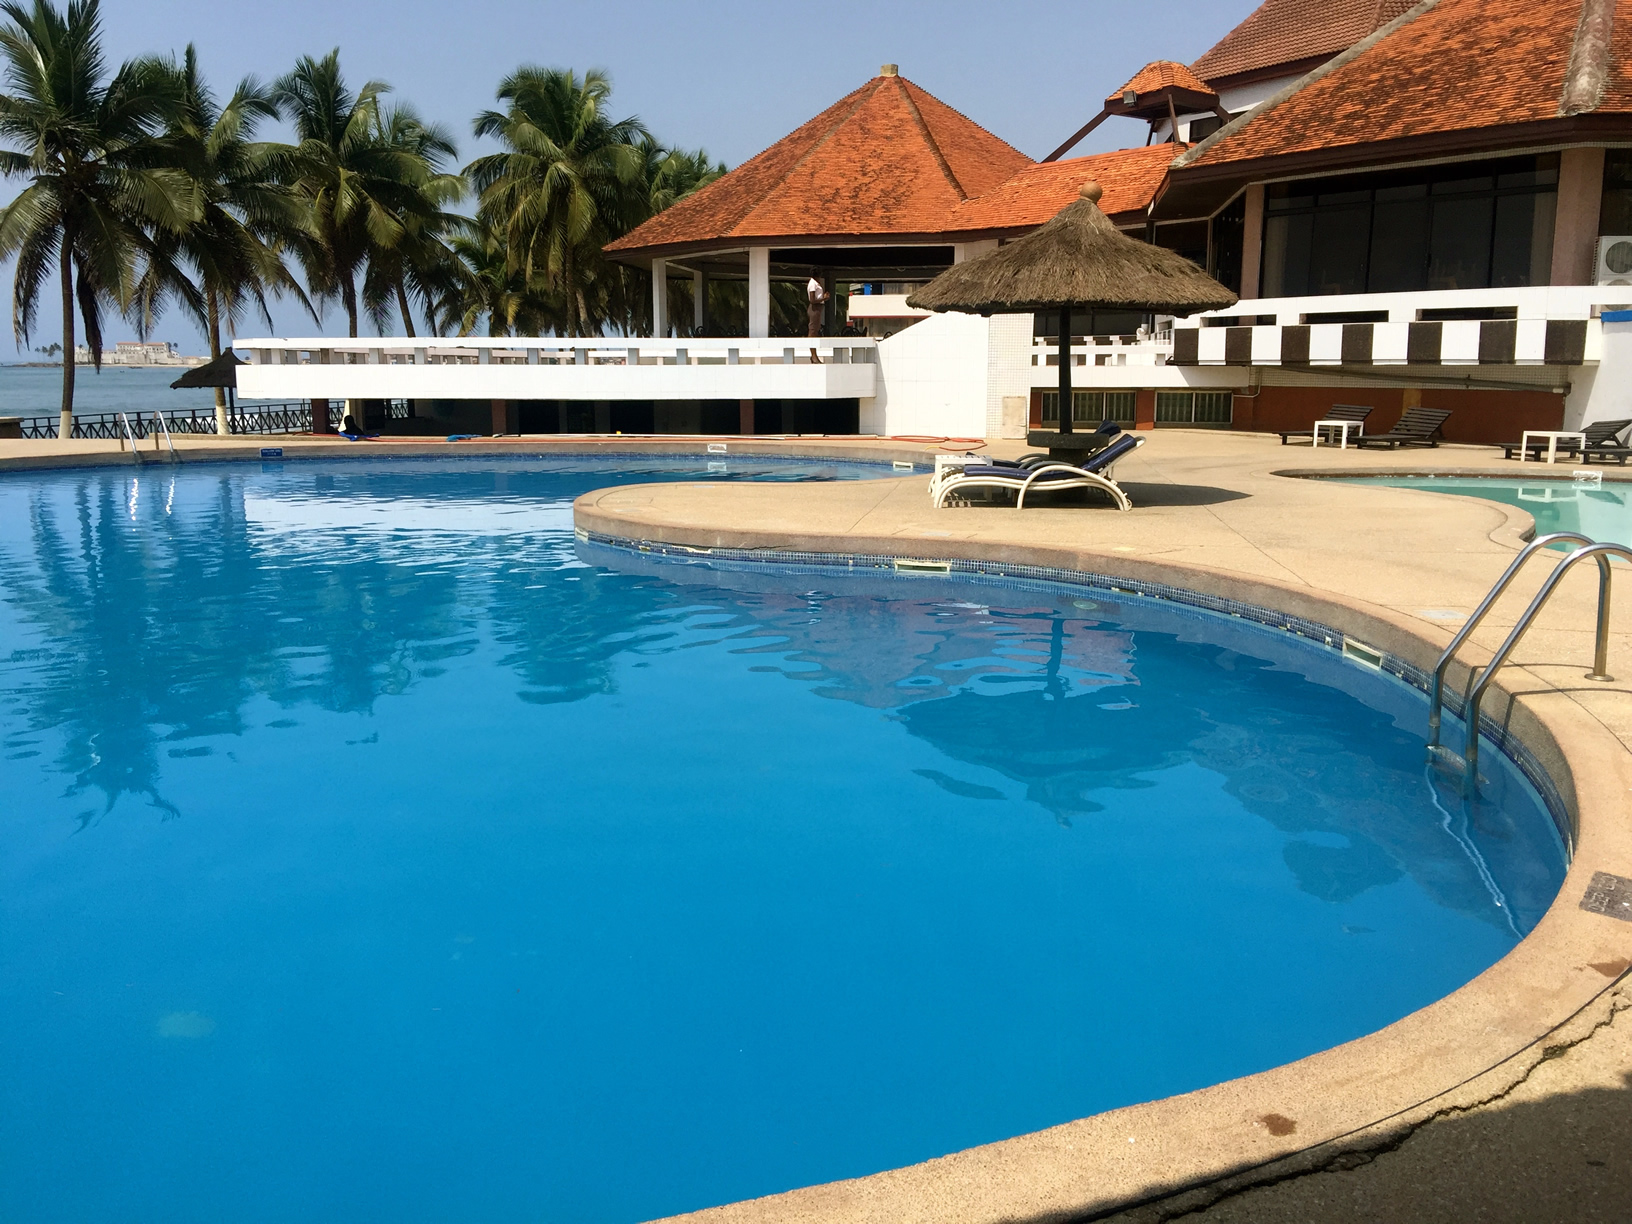 Elmina Beach Resort is one of the best resorts in Ghana